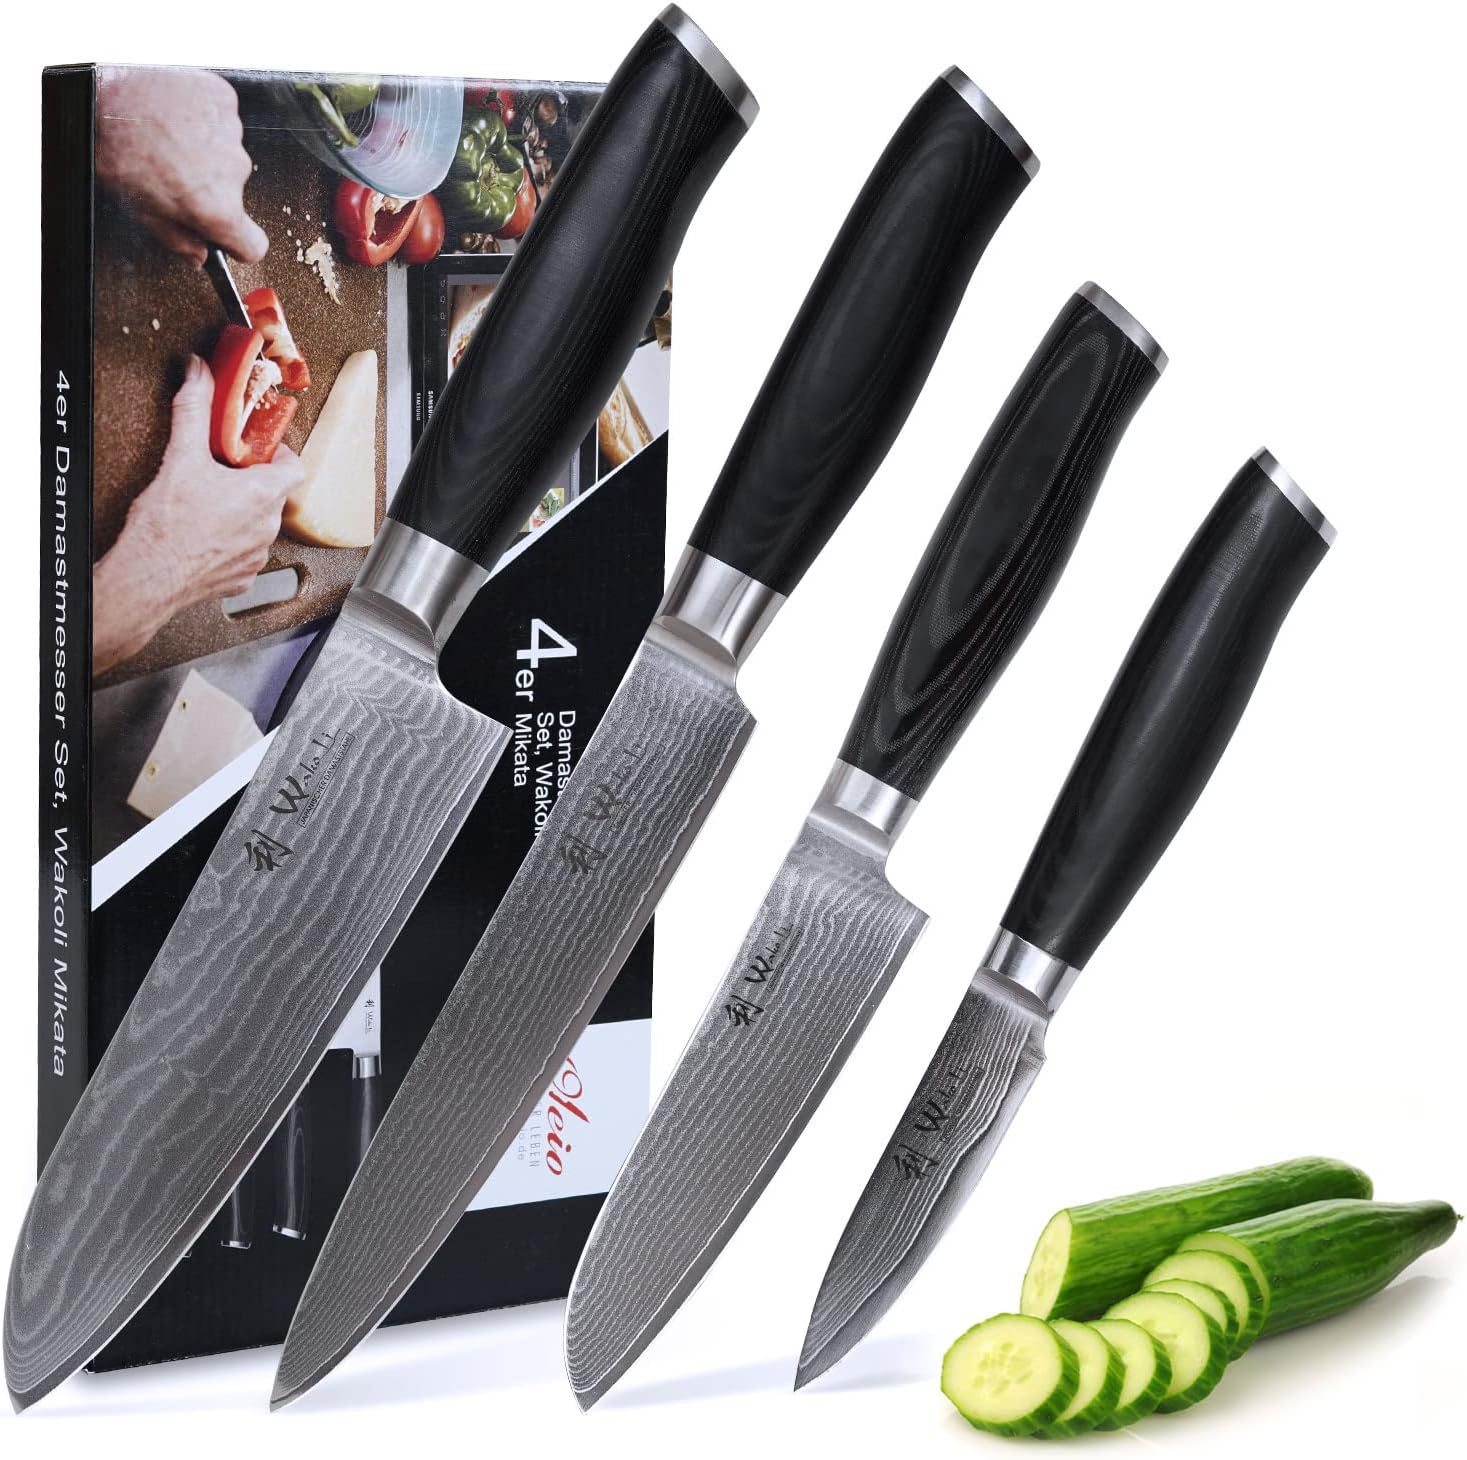 Wakoli Mikata 4-pcs Damascus Knife Set made of 67 Layers Japanese Damascus Steel with VG10 Core I Professional Kitchen Knives, Chef Knife Set with Micarta Handle